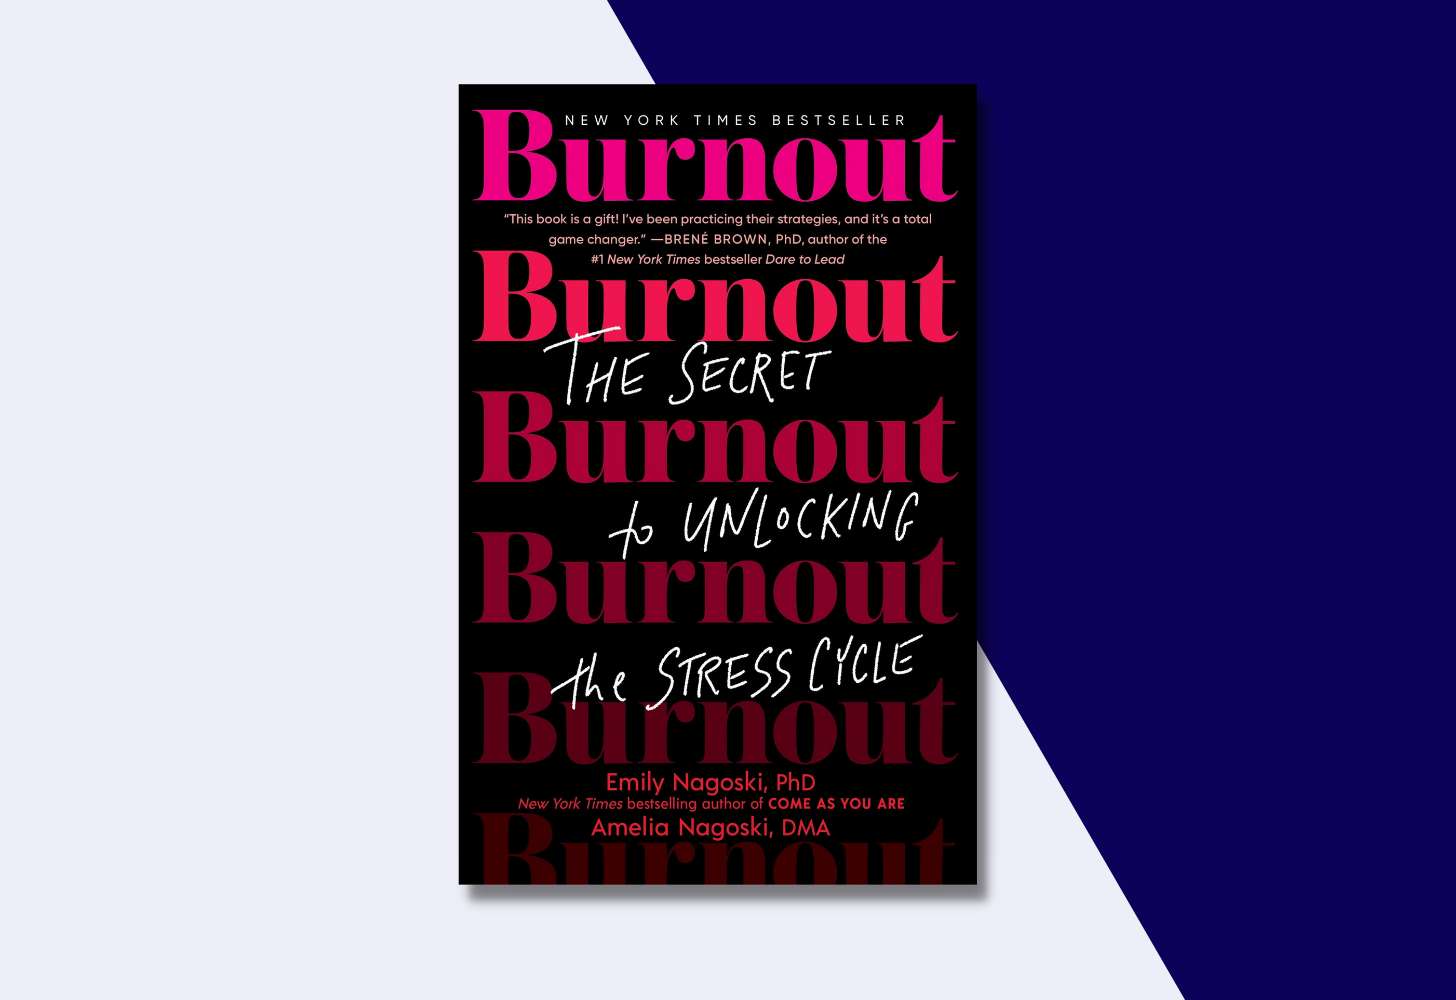 Book cover of Burnout by Emily Nagoski and Amelia Nagoski